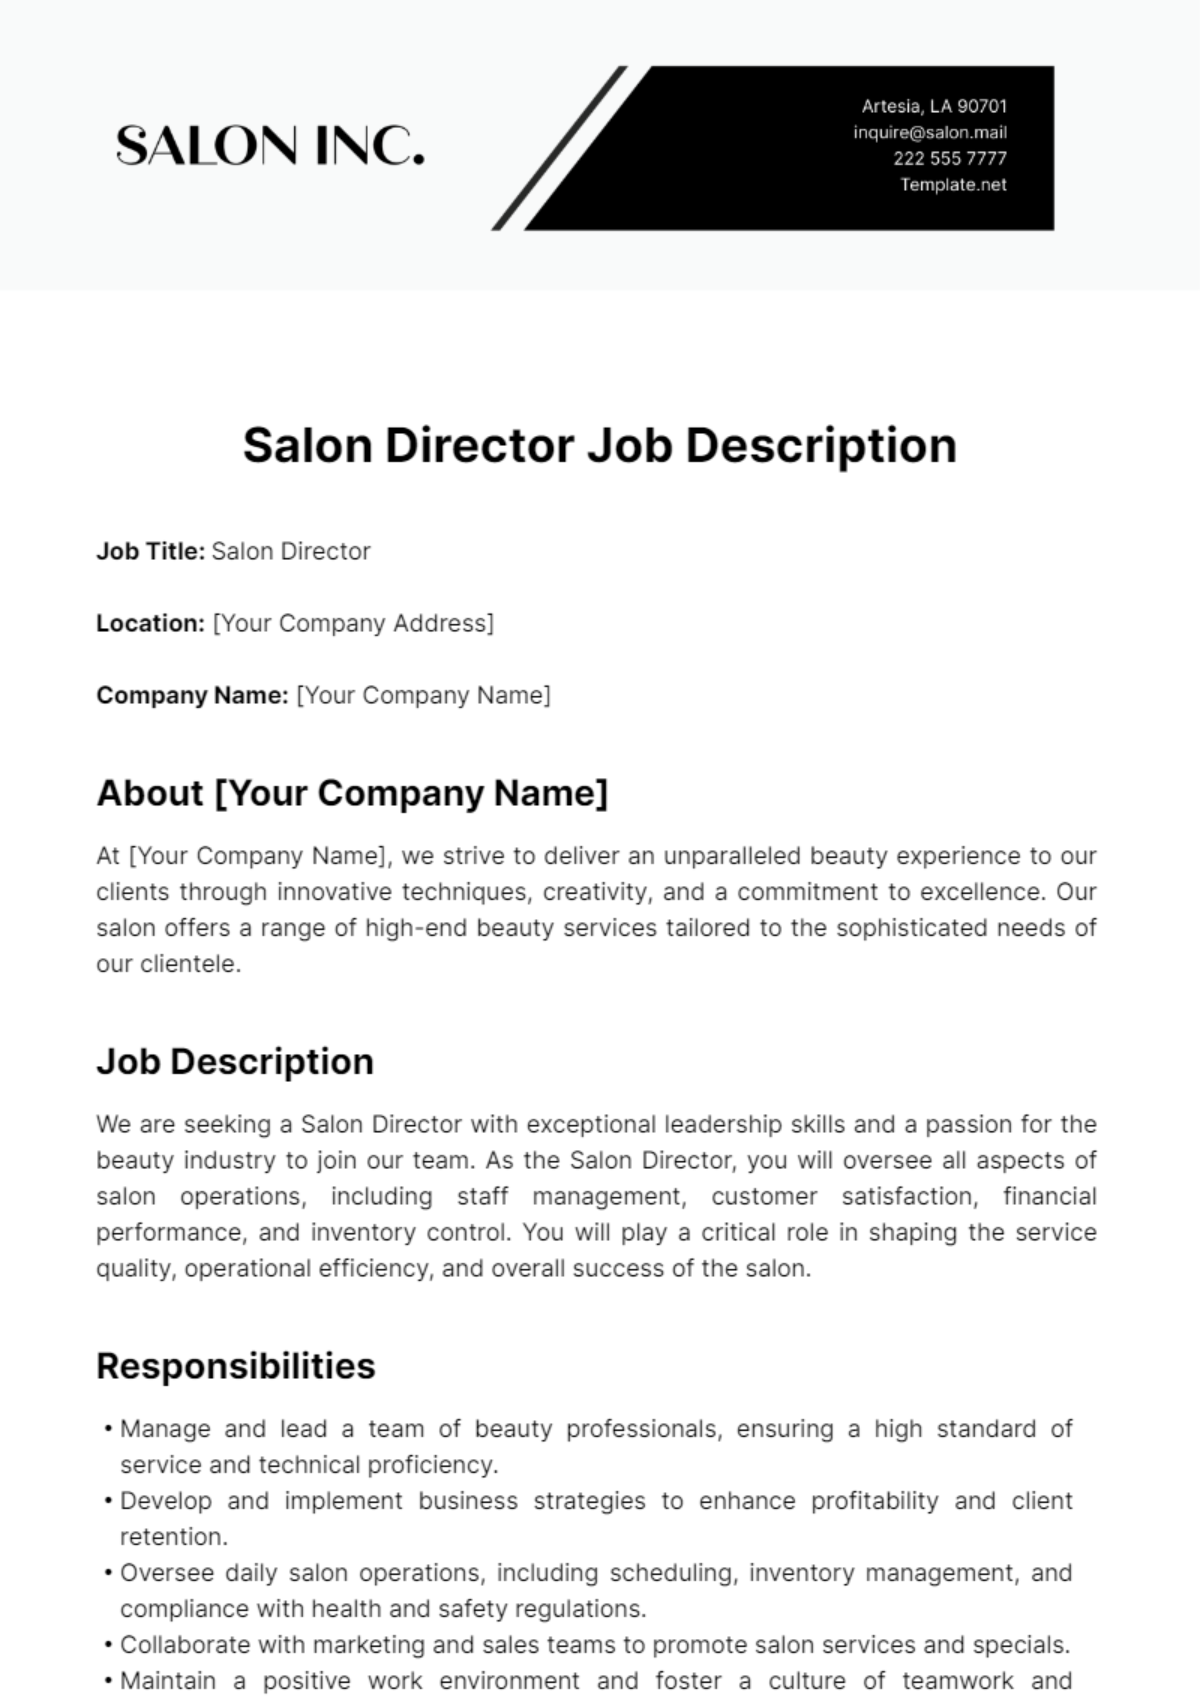 Free Salon Director Job Description Template